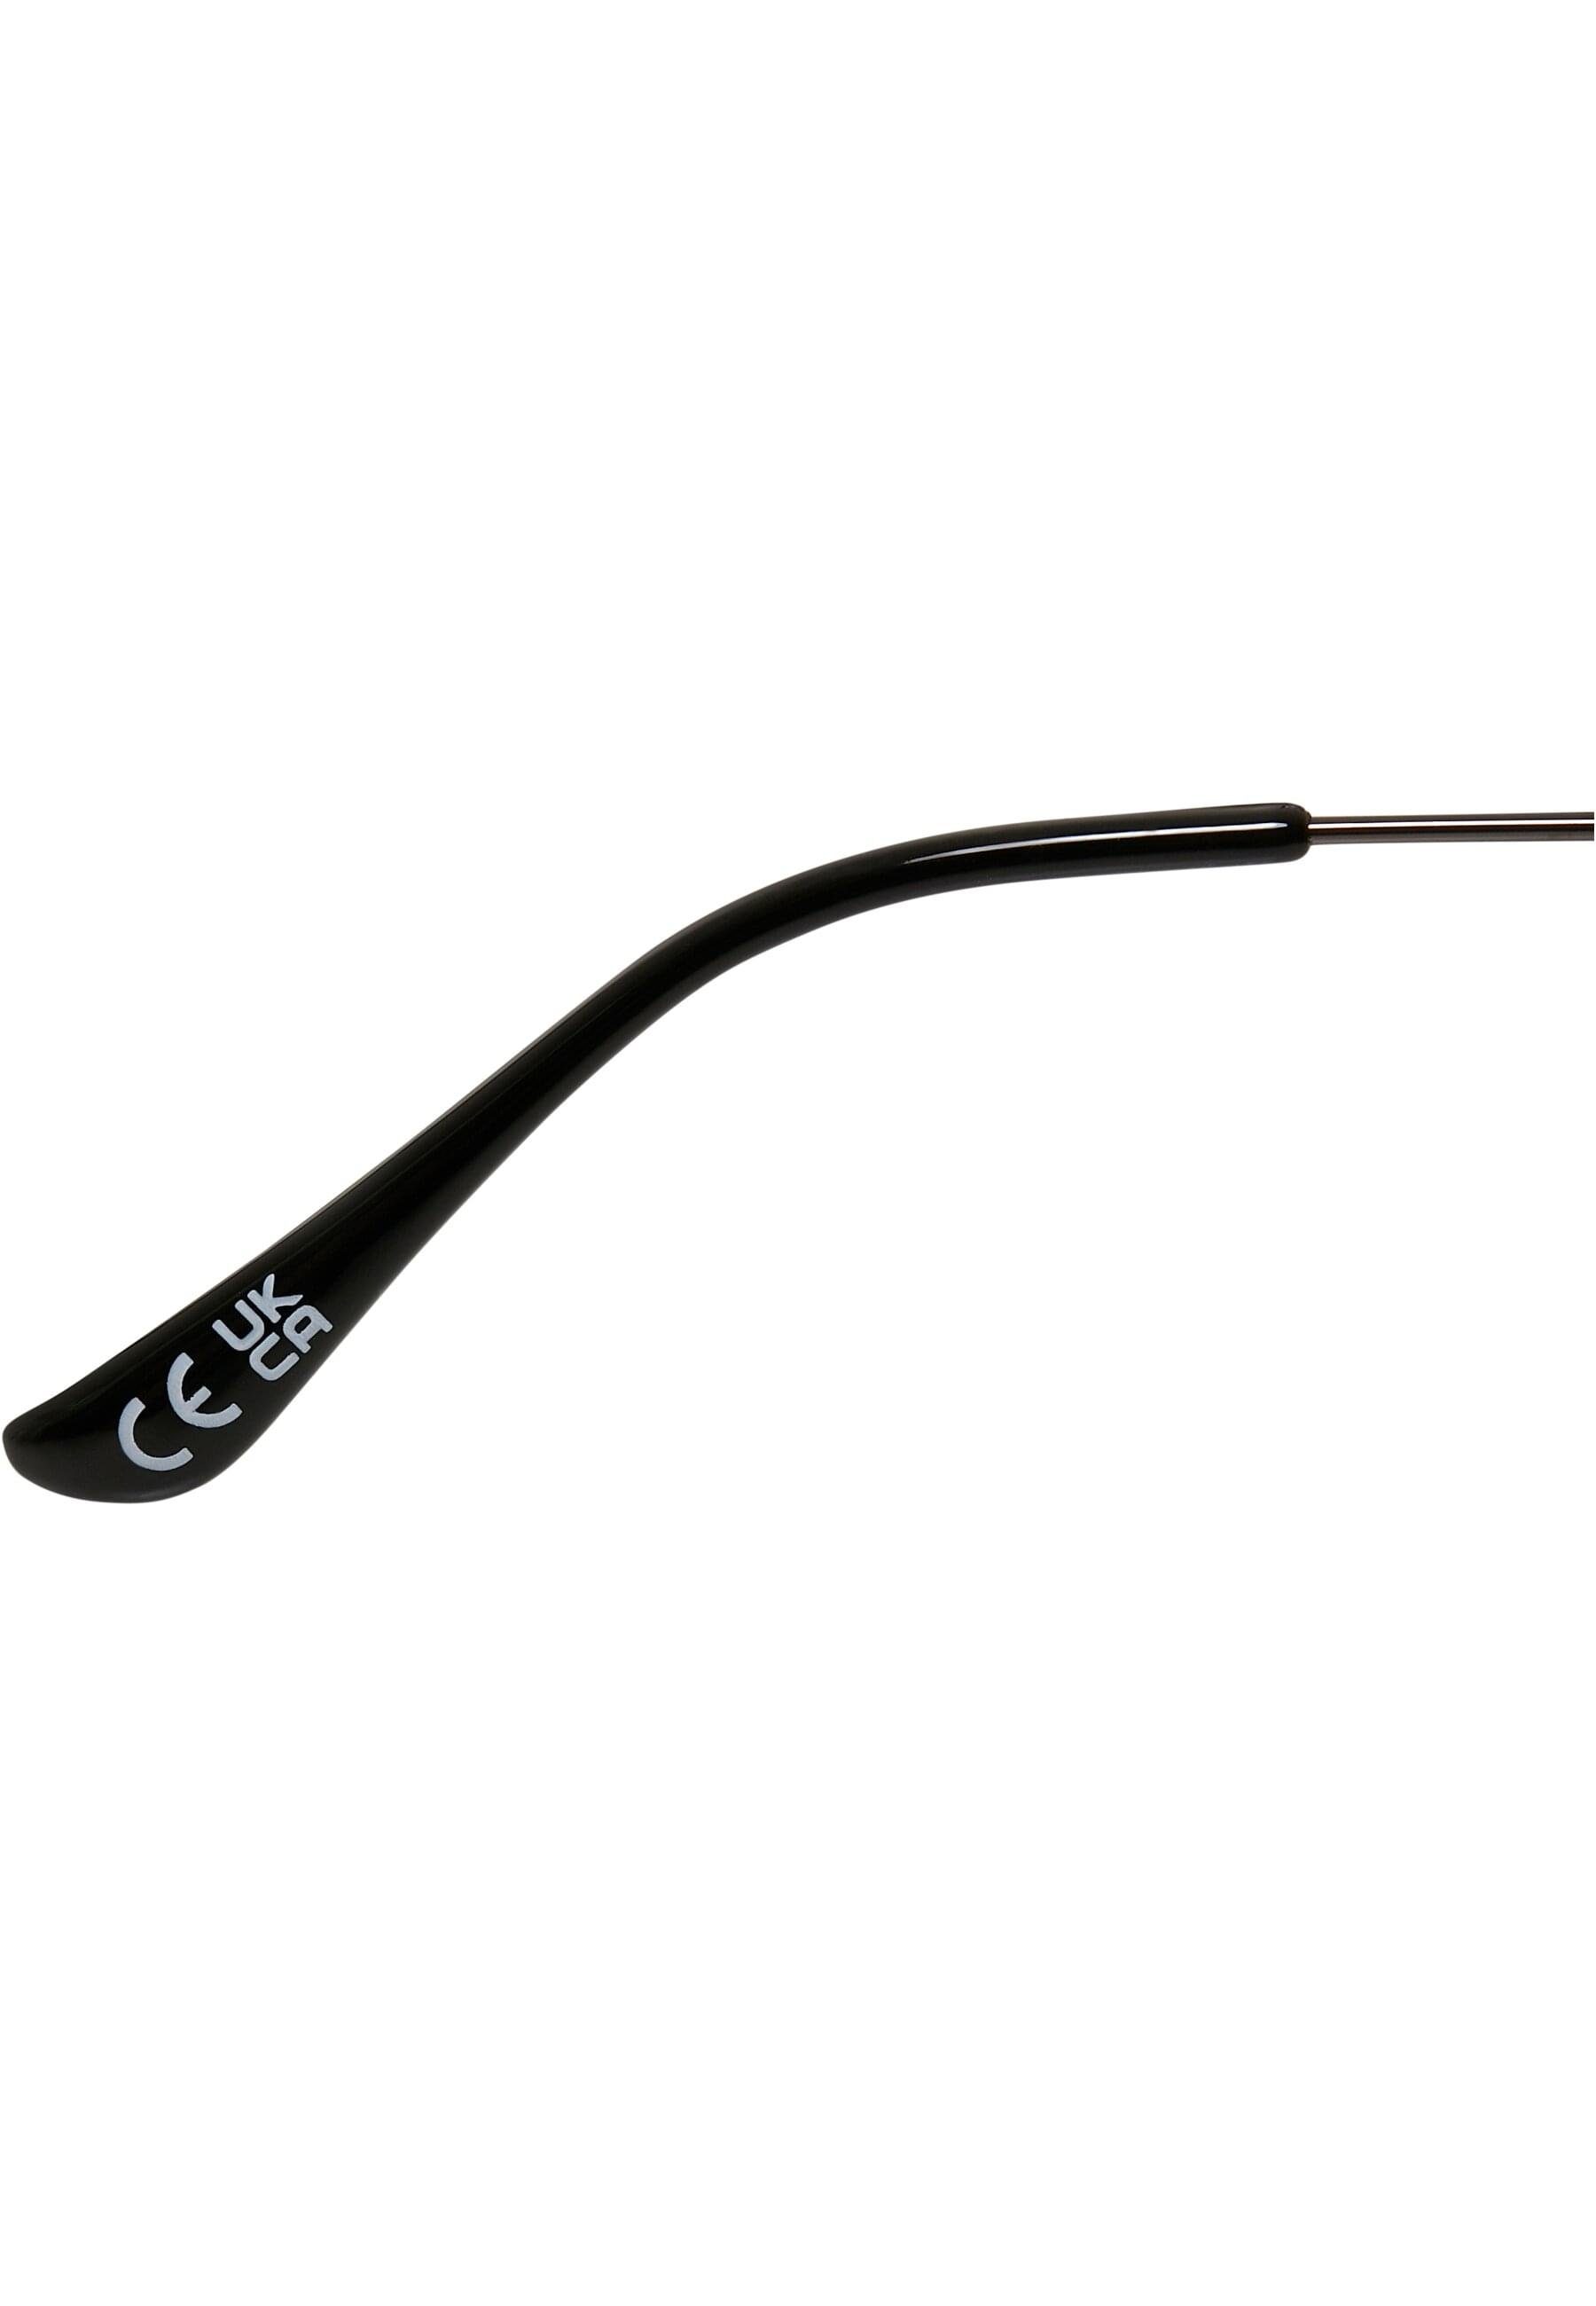 URBAN CLASSICS Sonnenbrille Unisex Sunglasses black/black With Heart Chain